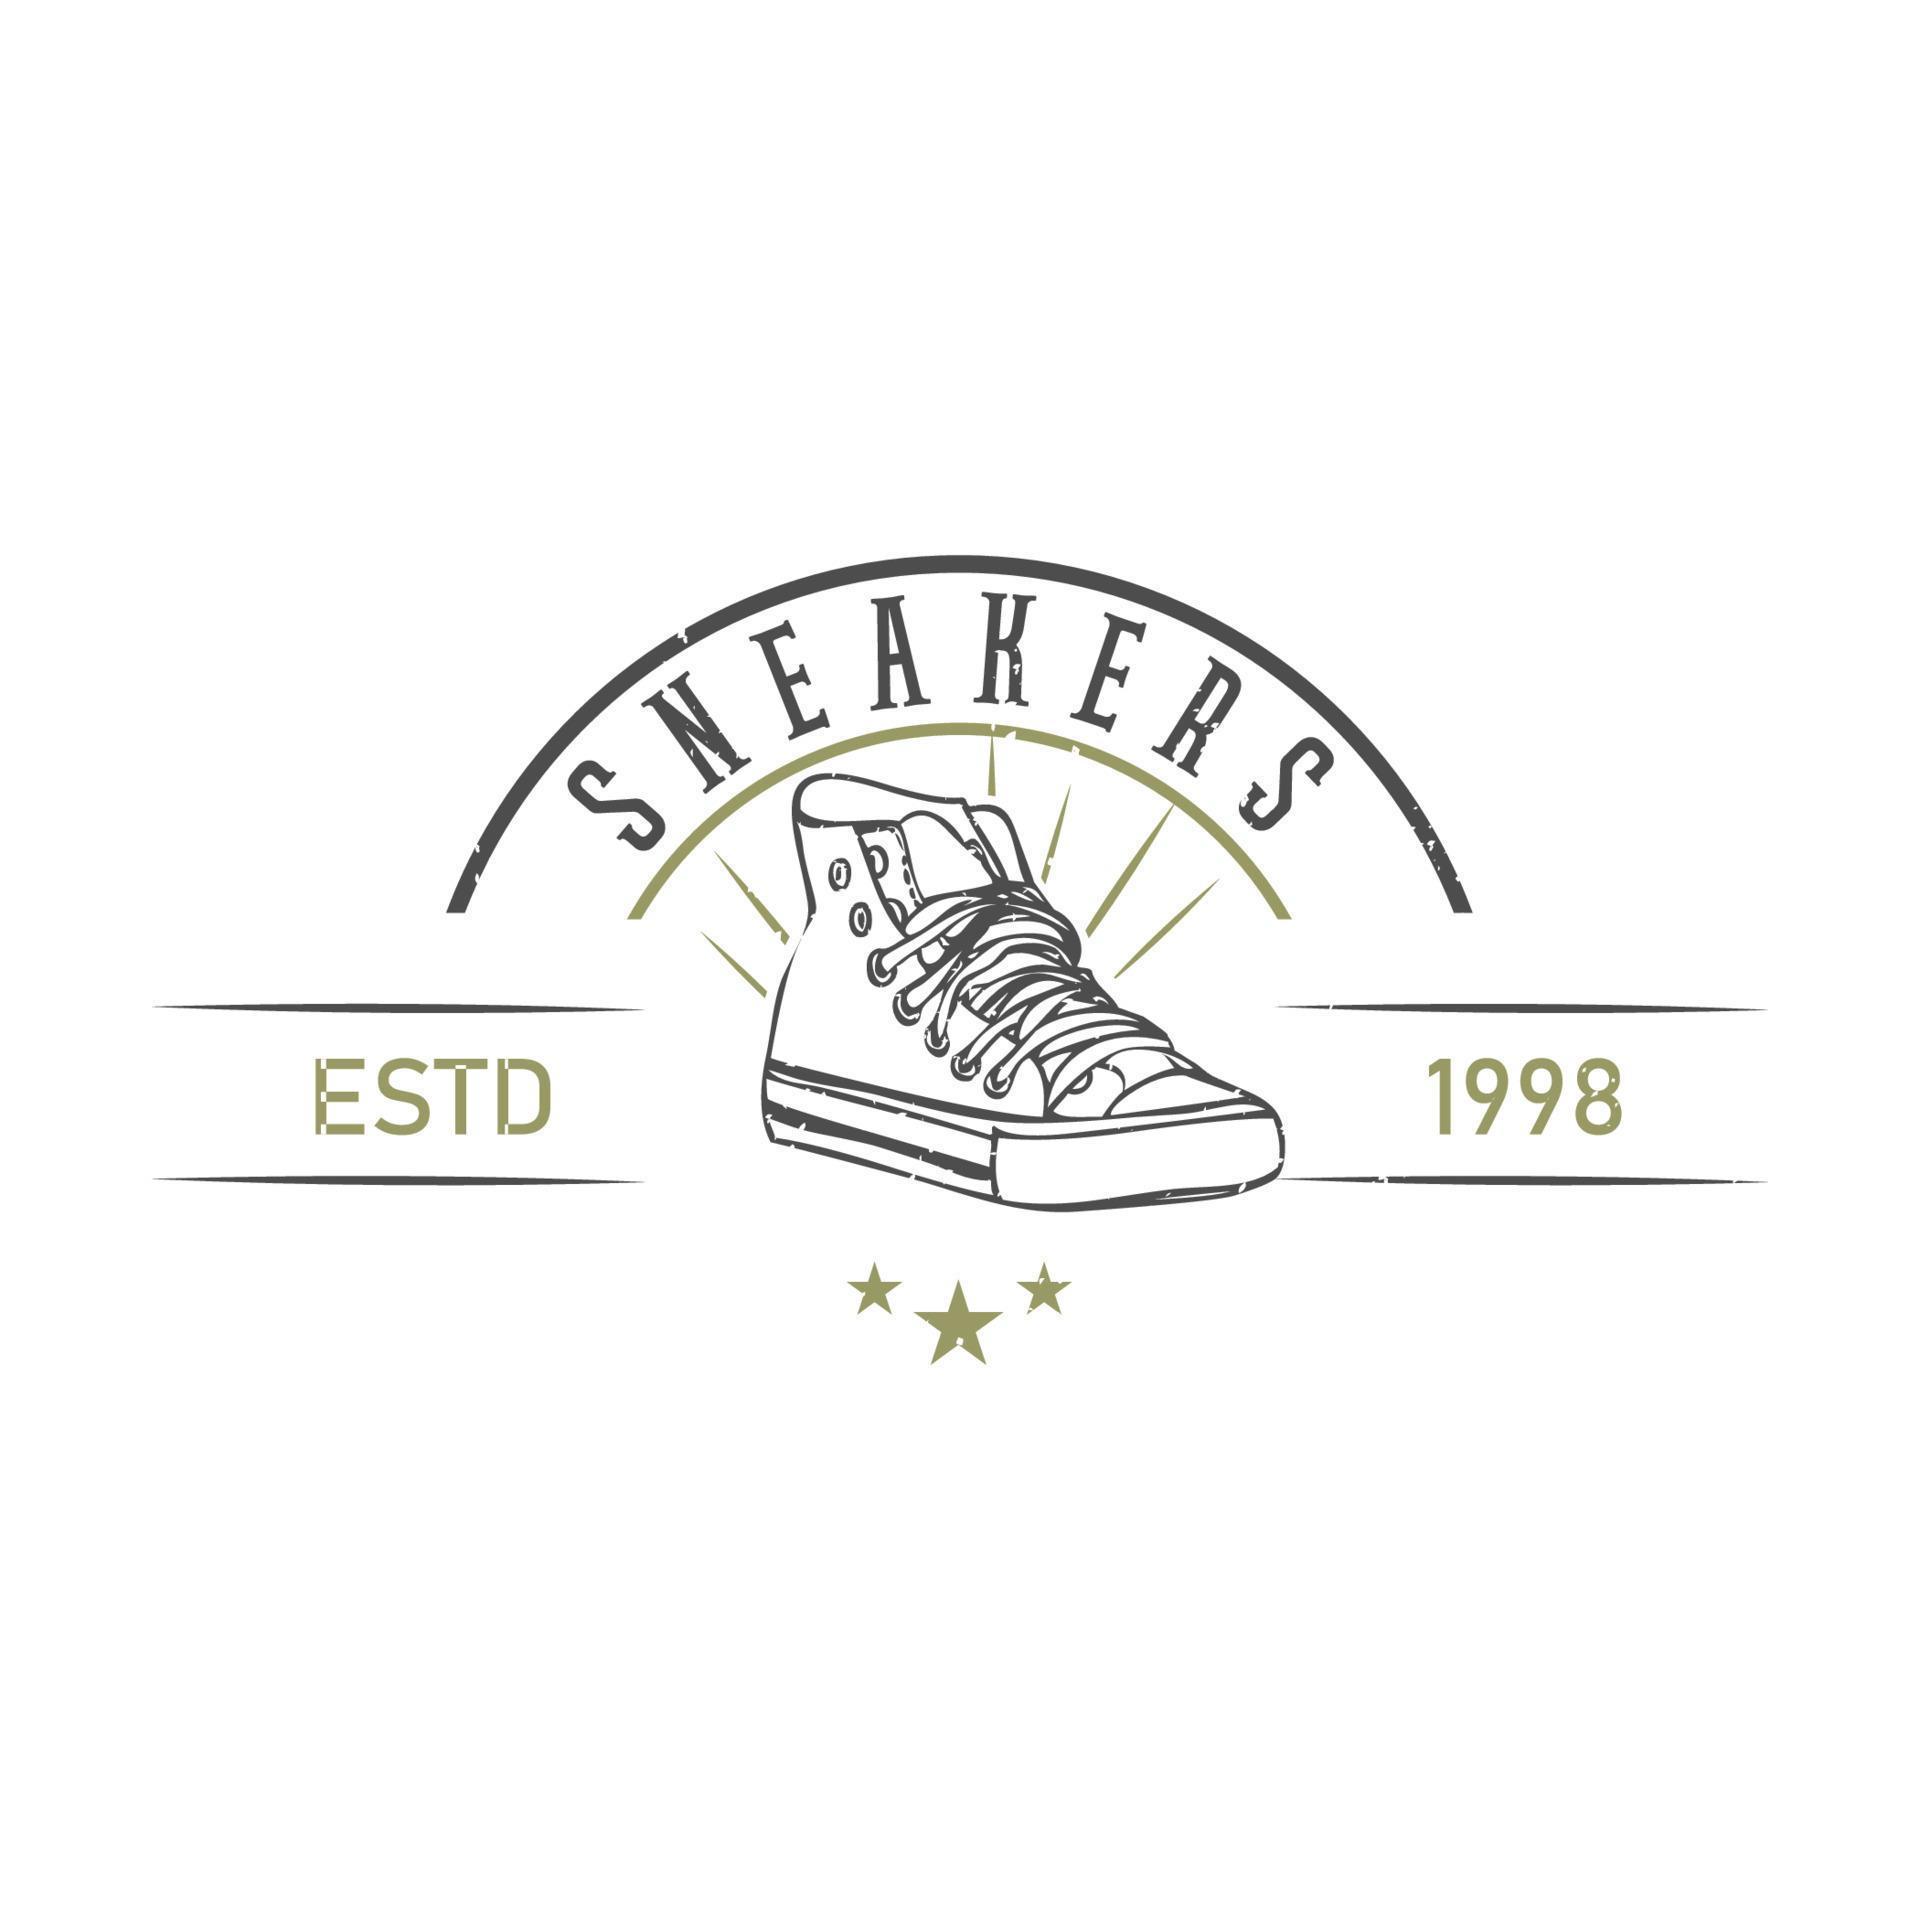 Sneakers shop logo design. Shoes store. Sneaker vector illustration ...